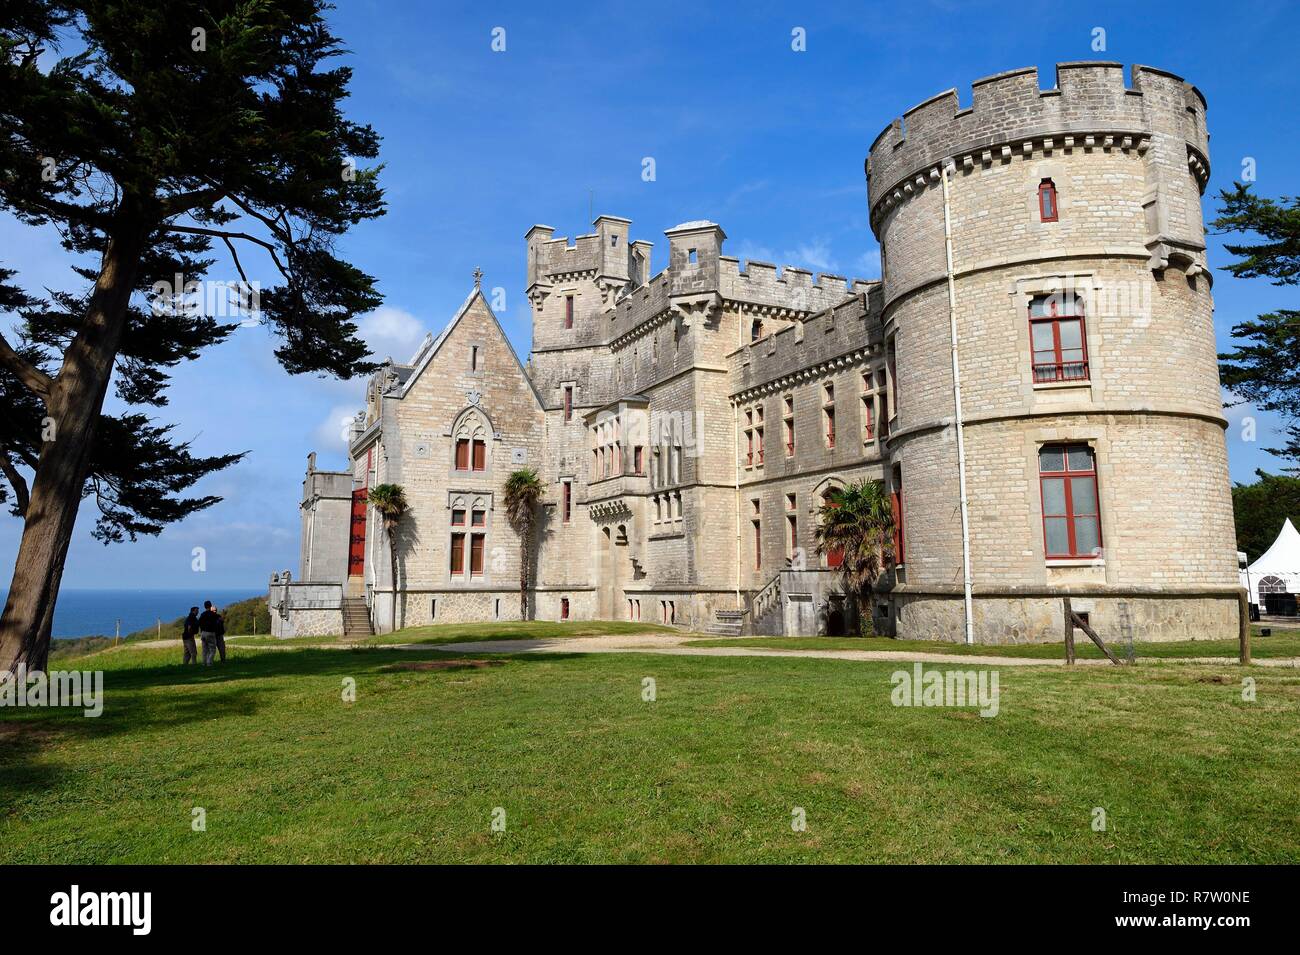 Francia, Pirineos Atlánticos, Costa Vasca, Hendaye, Abbadia castillo construido en 1870 por Eugène Viollet-le-Duc de Antoine d'Abbadie d'Arrast Foto de stock